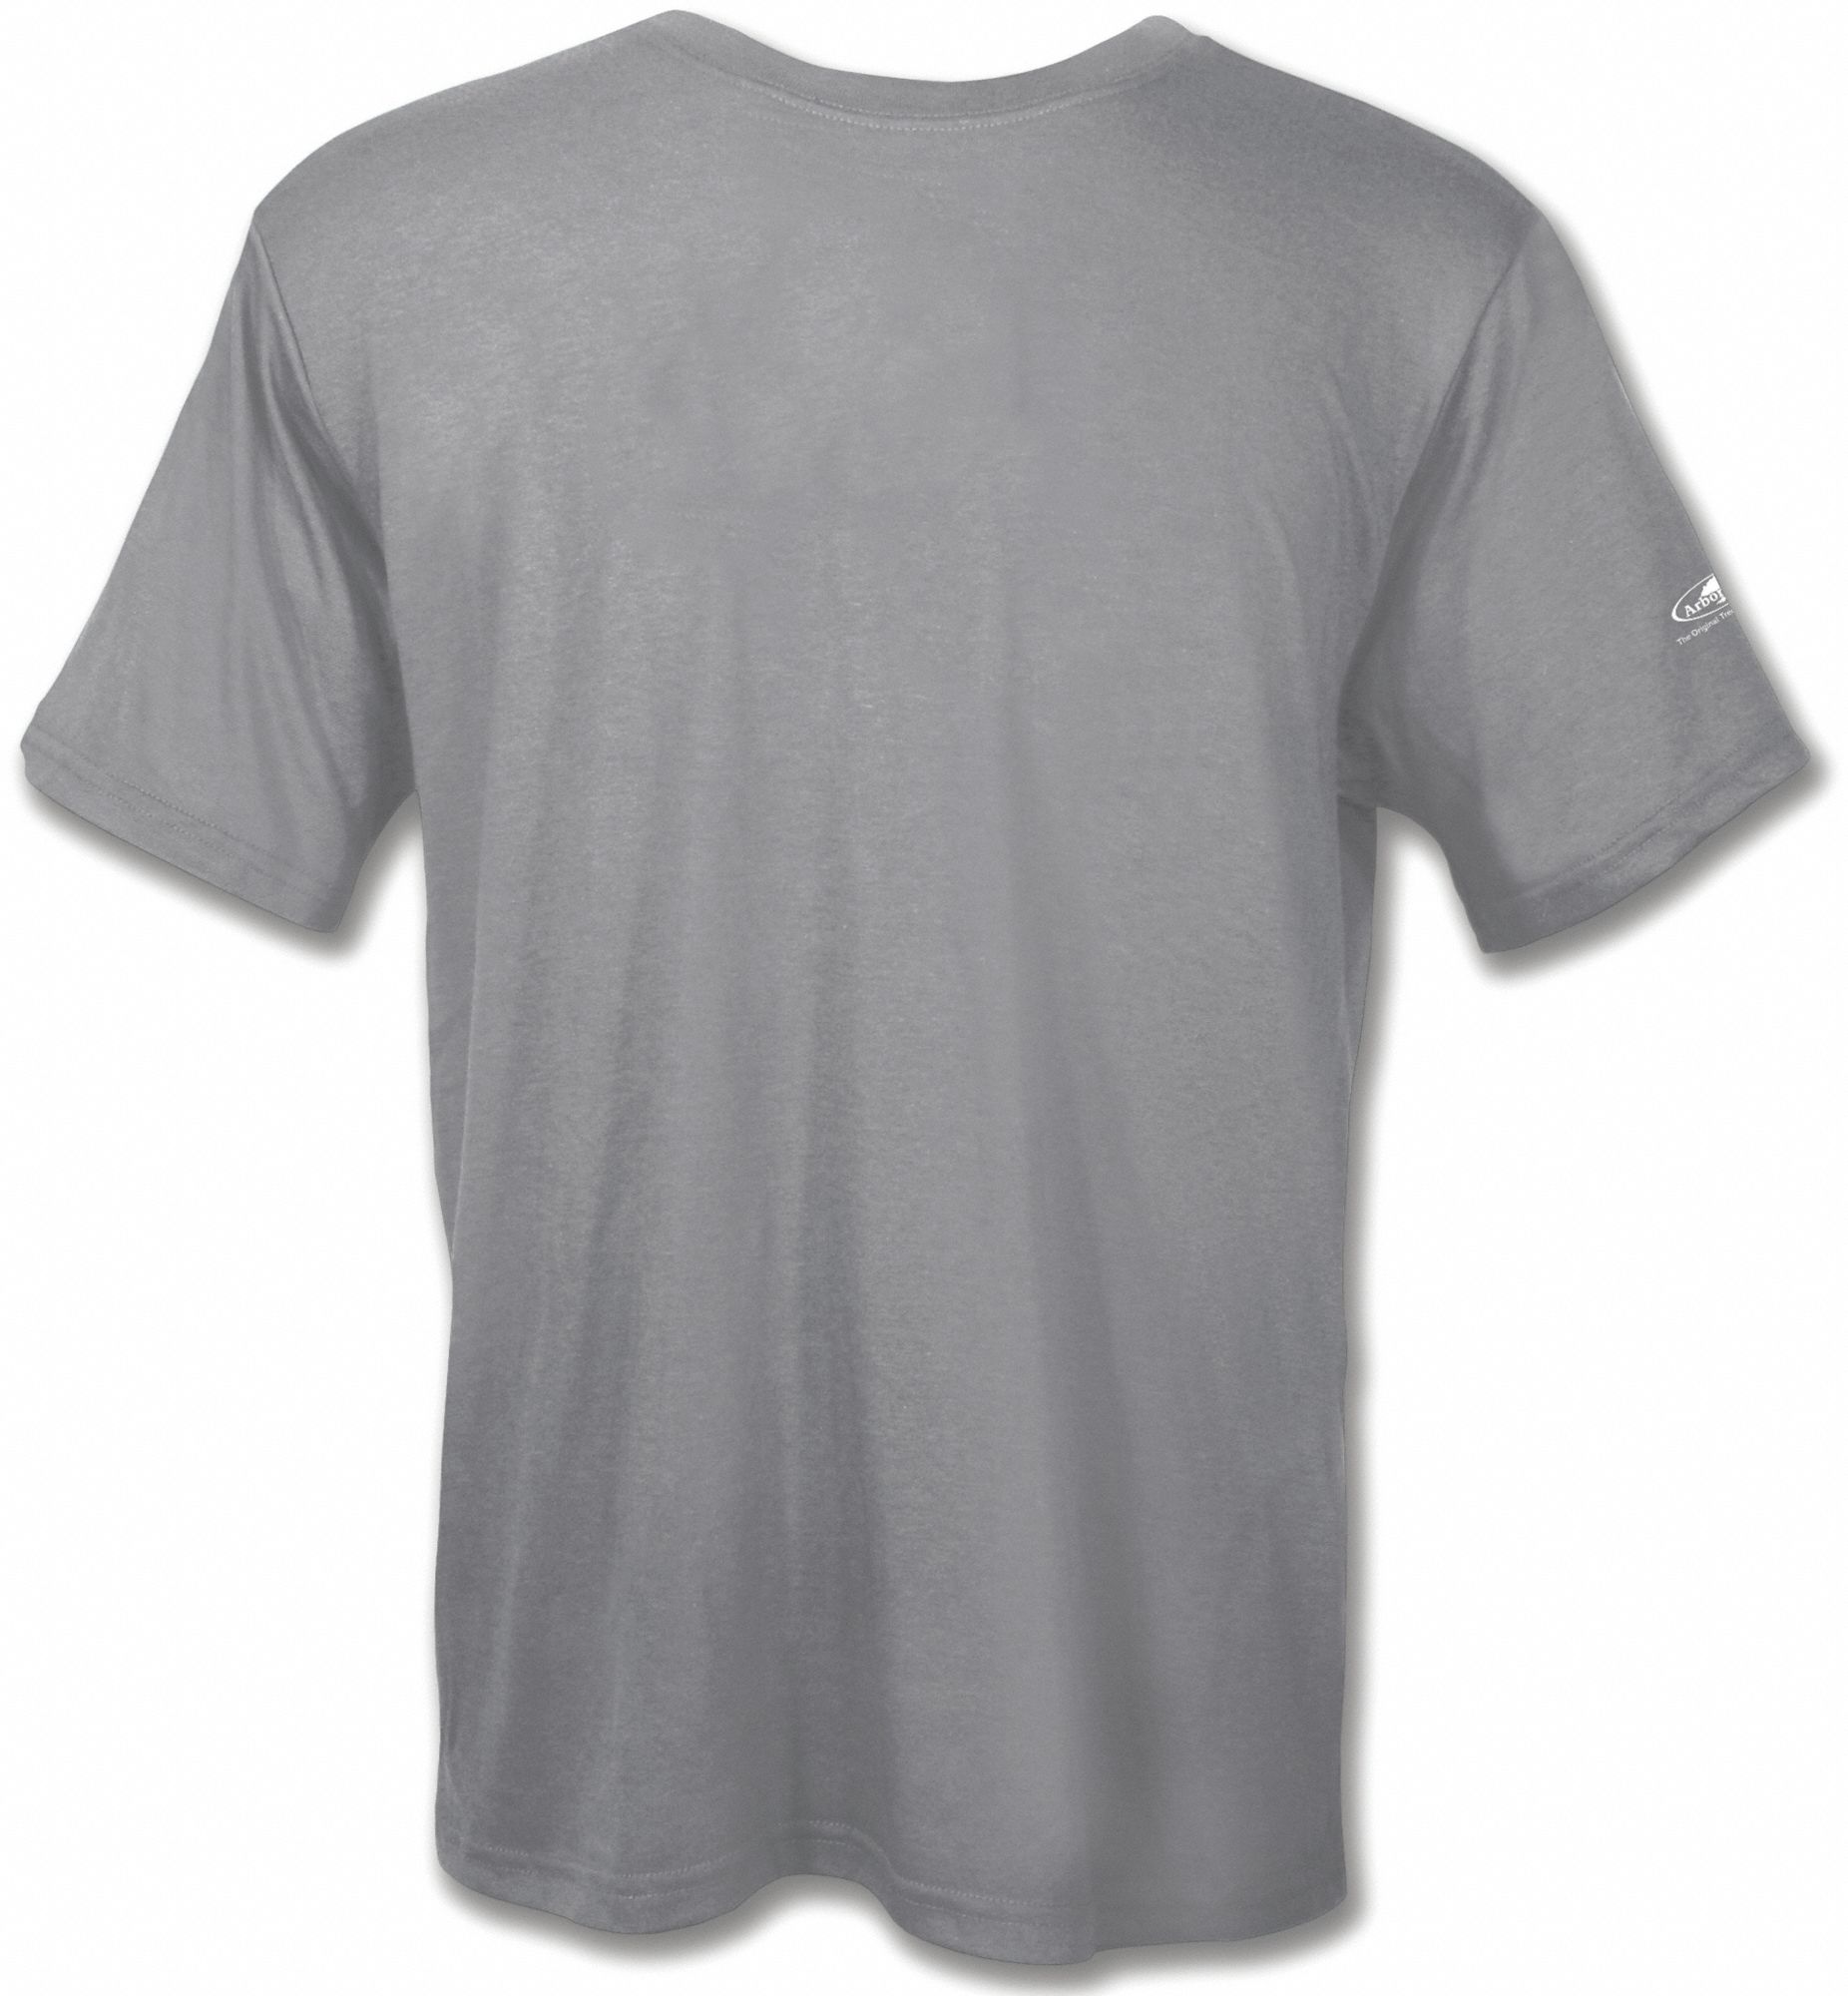 ARBORWEAR Mens, SS Wicking Tech T-shirt, Gray, L - 9KVZ4|706563 GRAY L ...